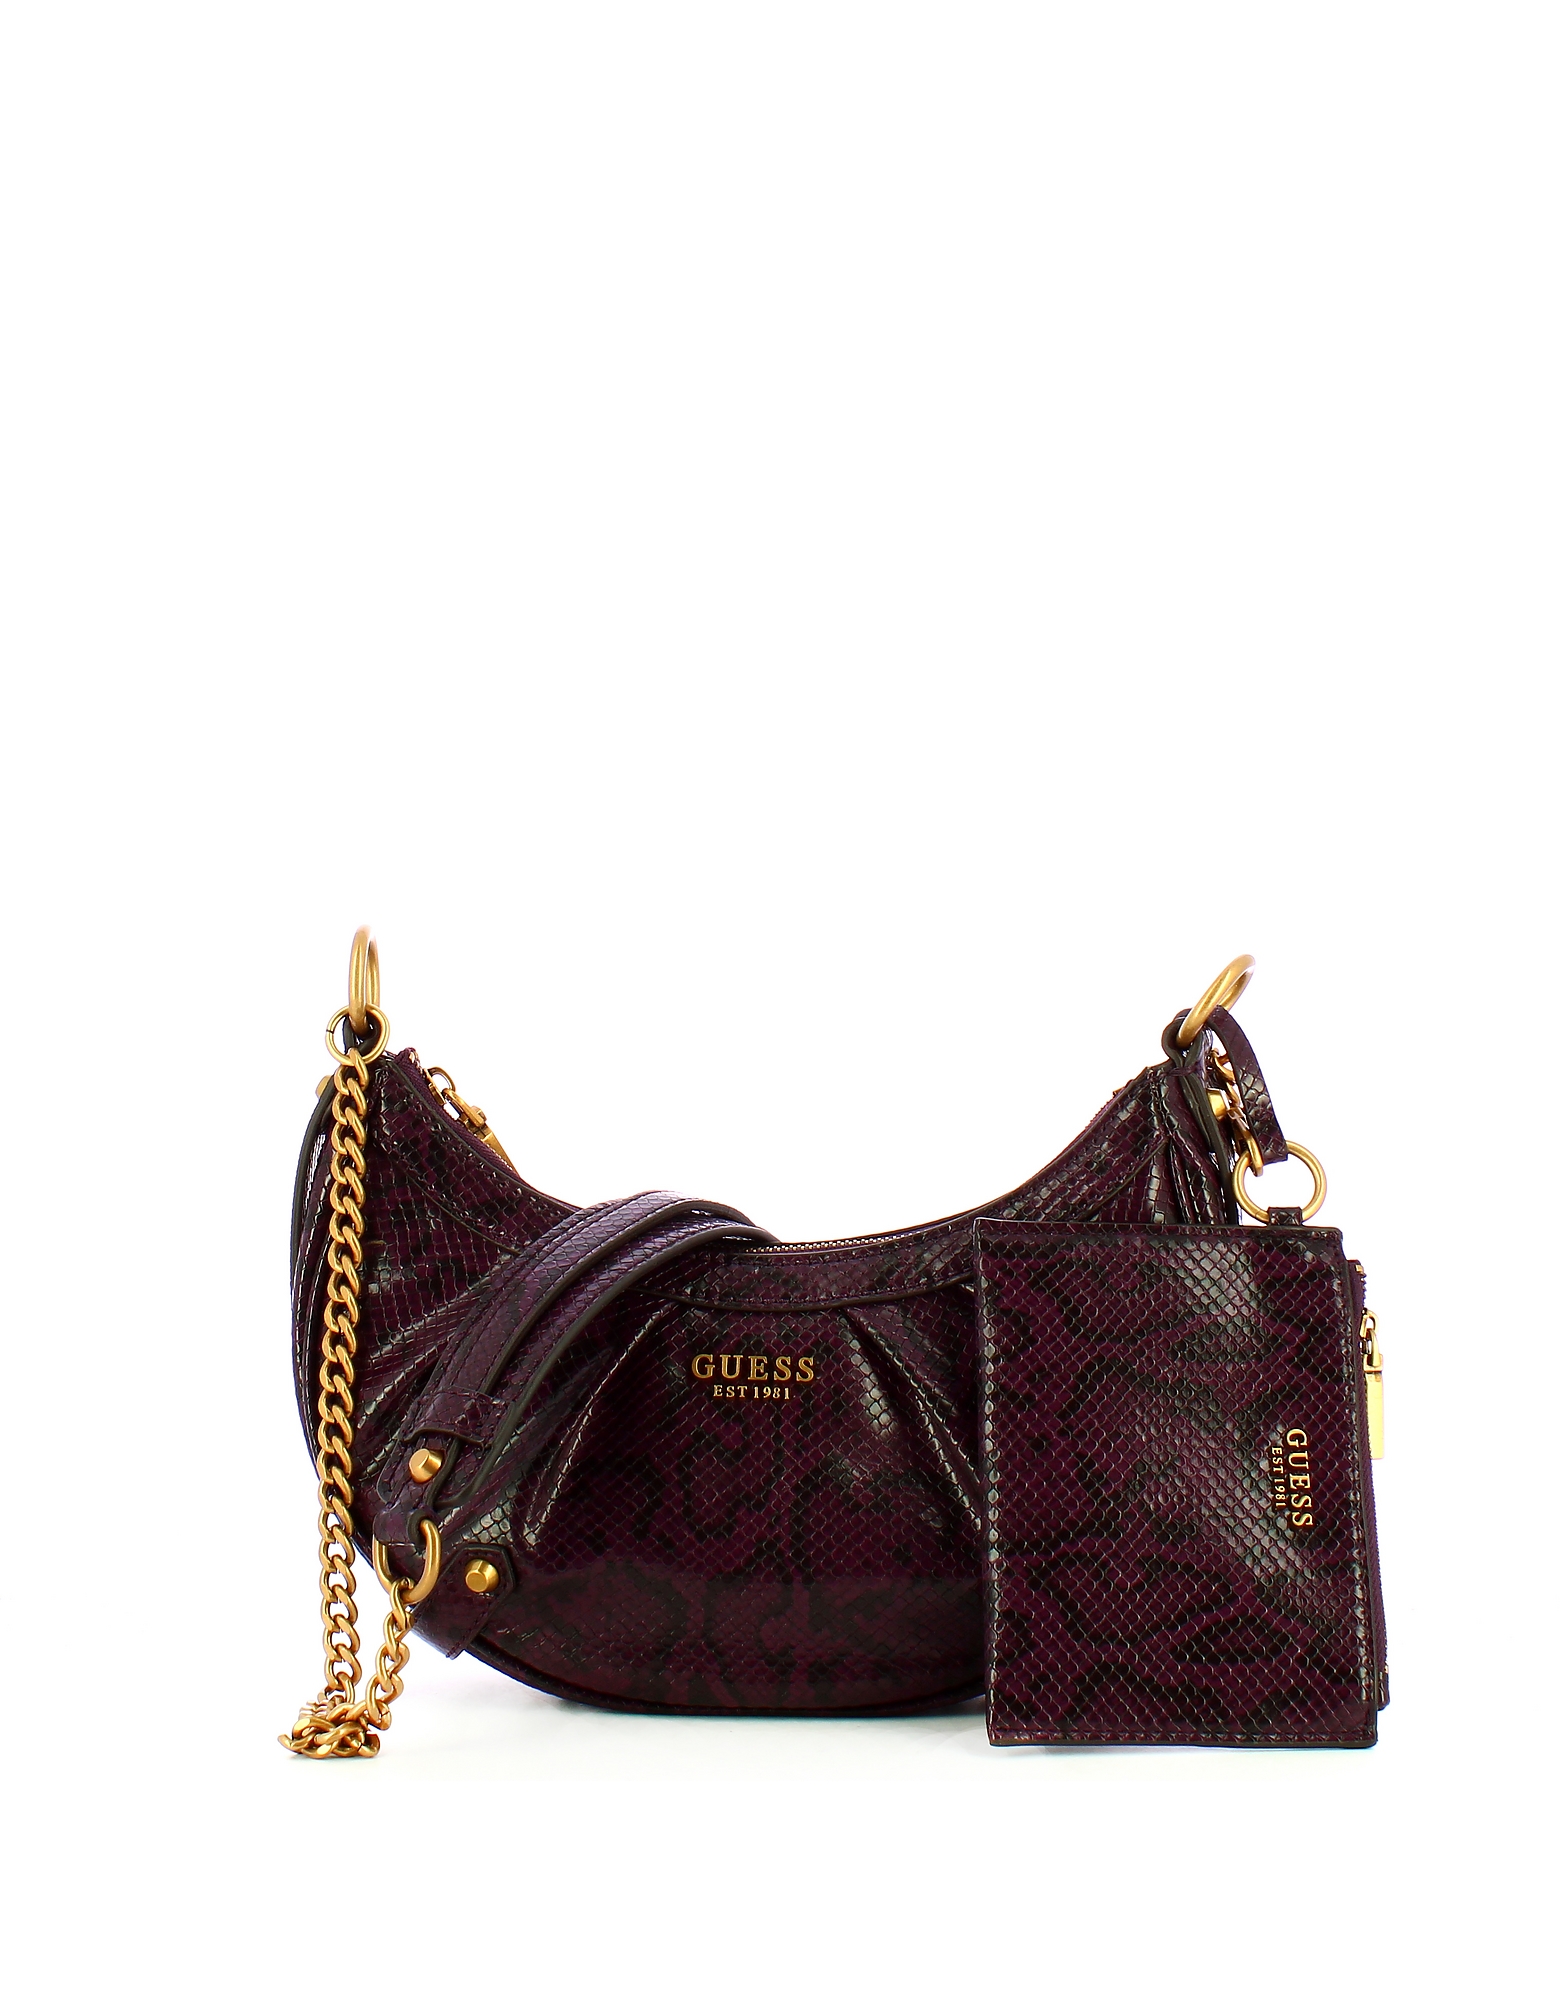 Guess Designer Handbags Women's Bag In Pattern